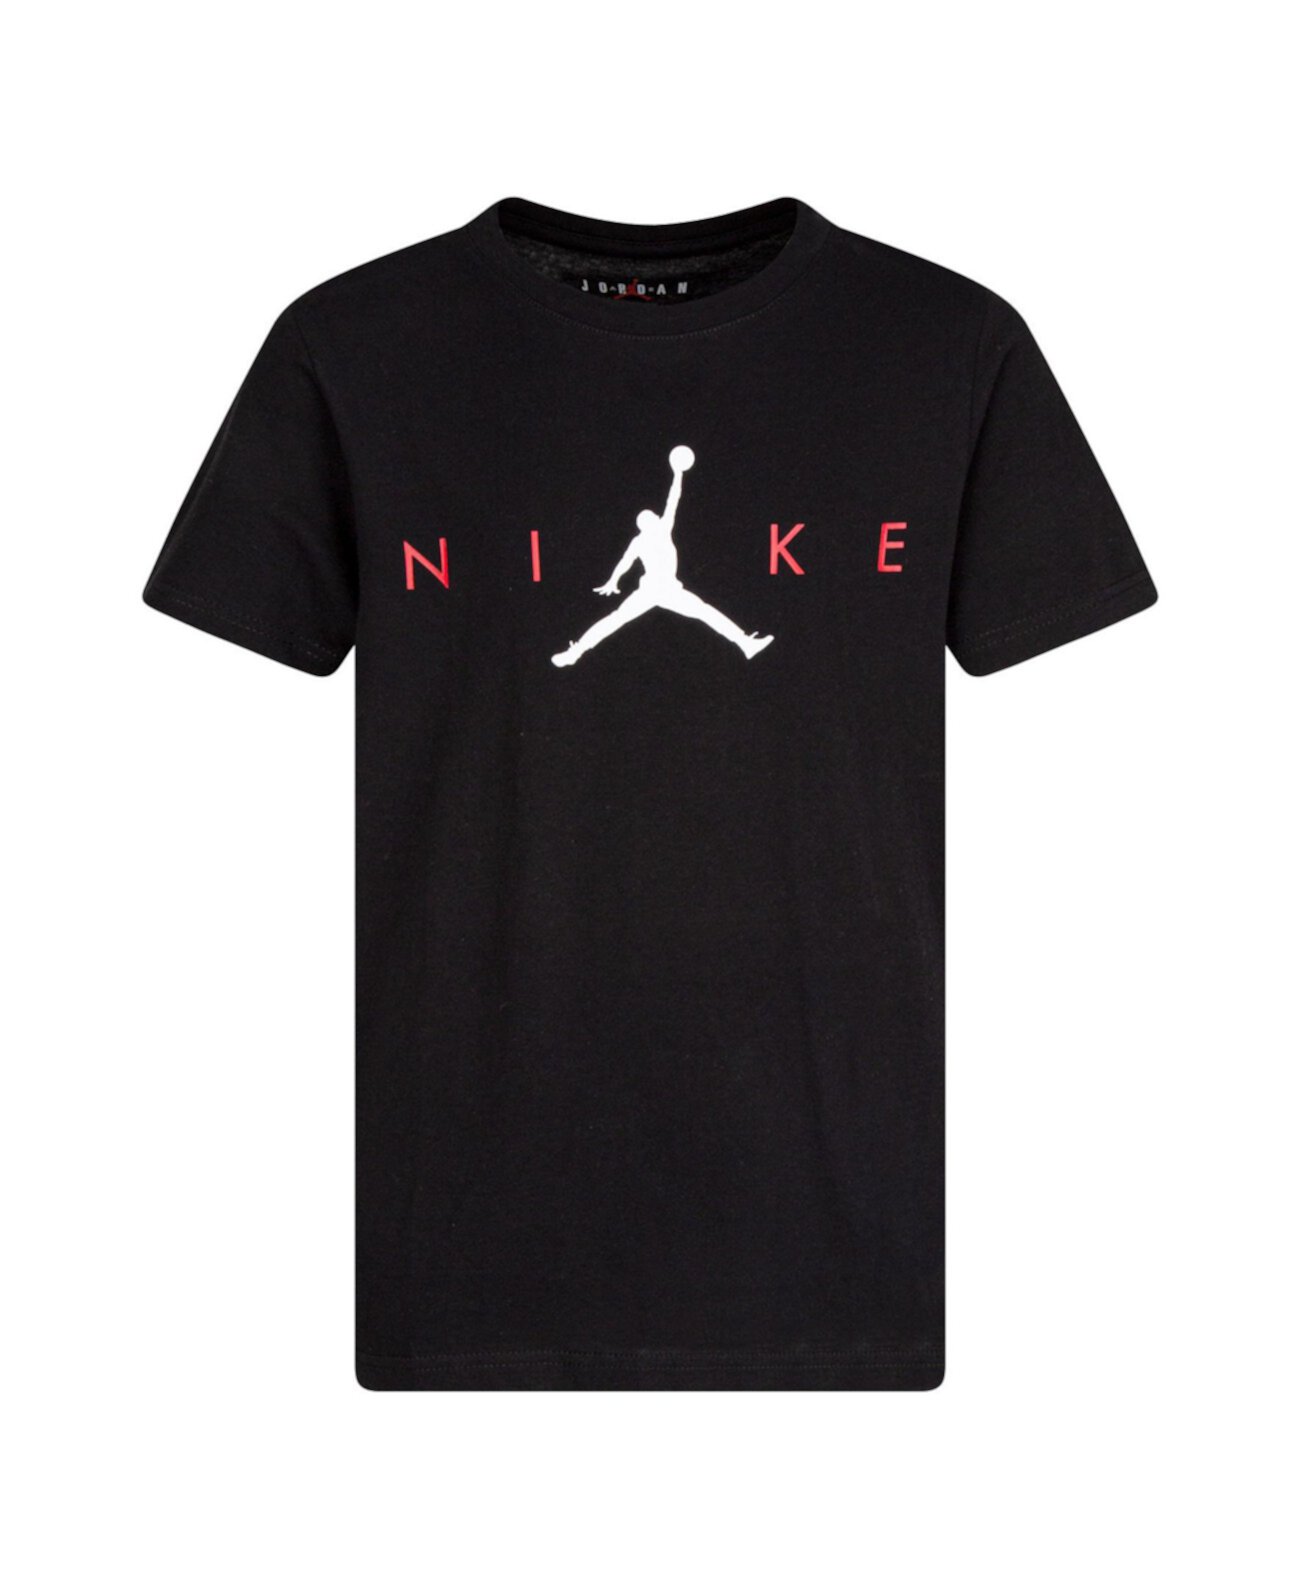 Футболка Little Boys Jumpman by Nike с графическим логотипом Jordan